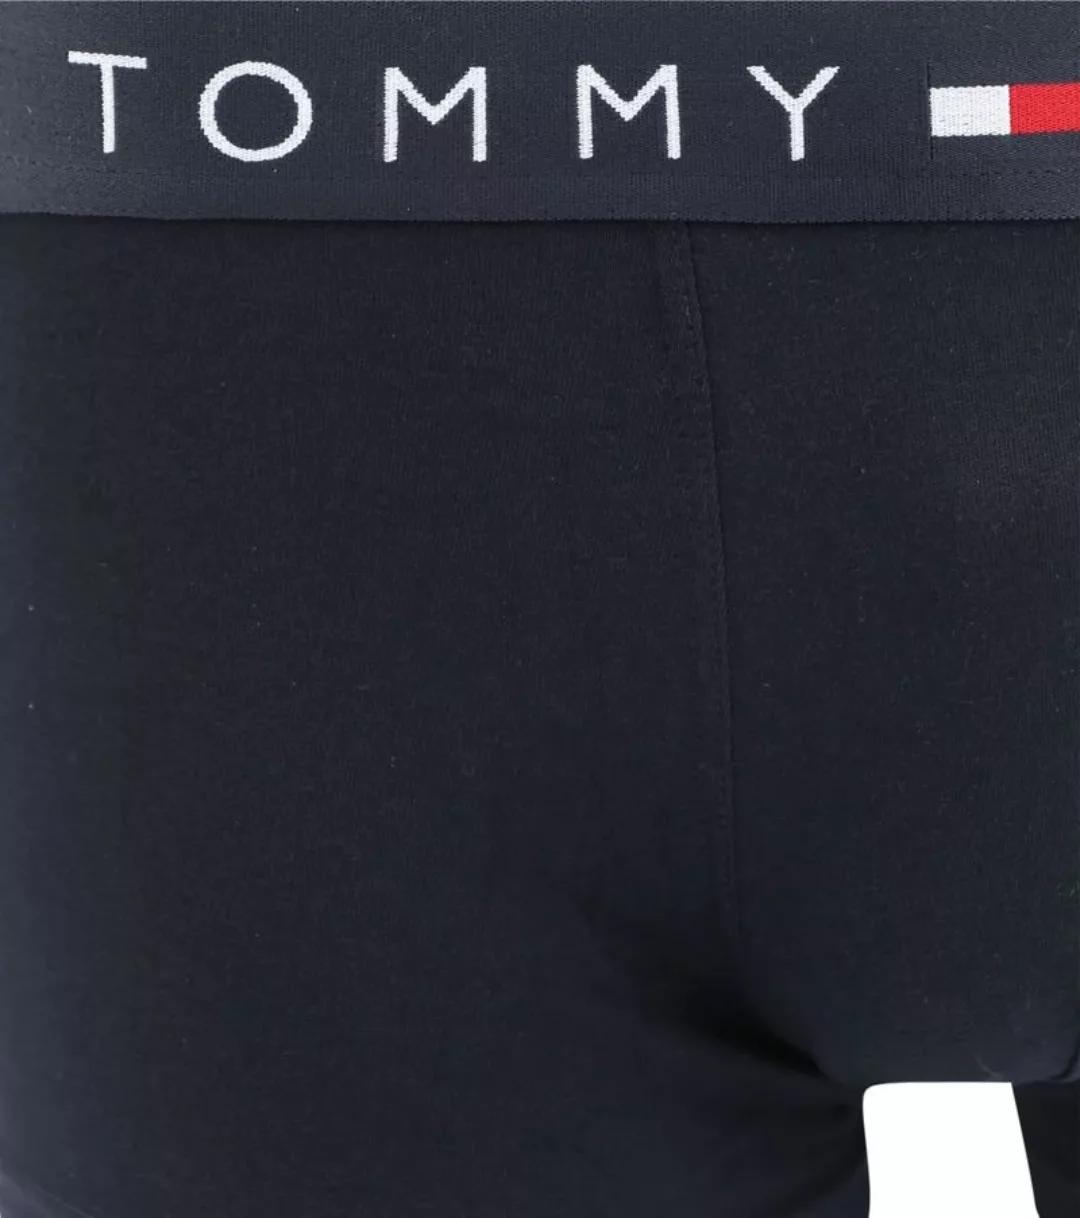 Tommy Hilfiger Boxer Trunk 3-Pack Desert Sky - Größe L günstig online kaufen